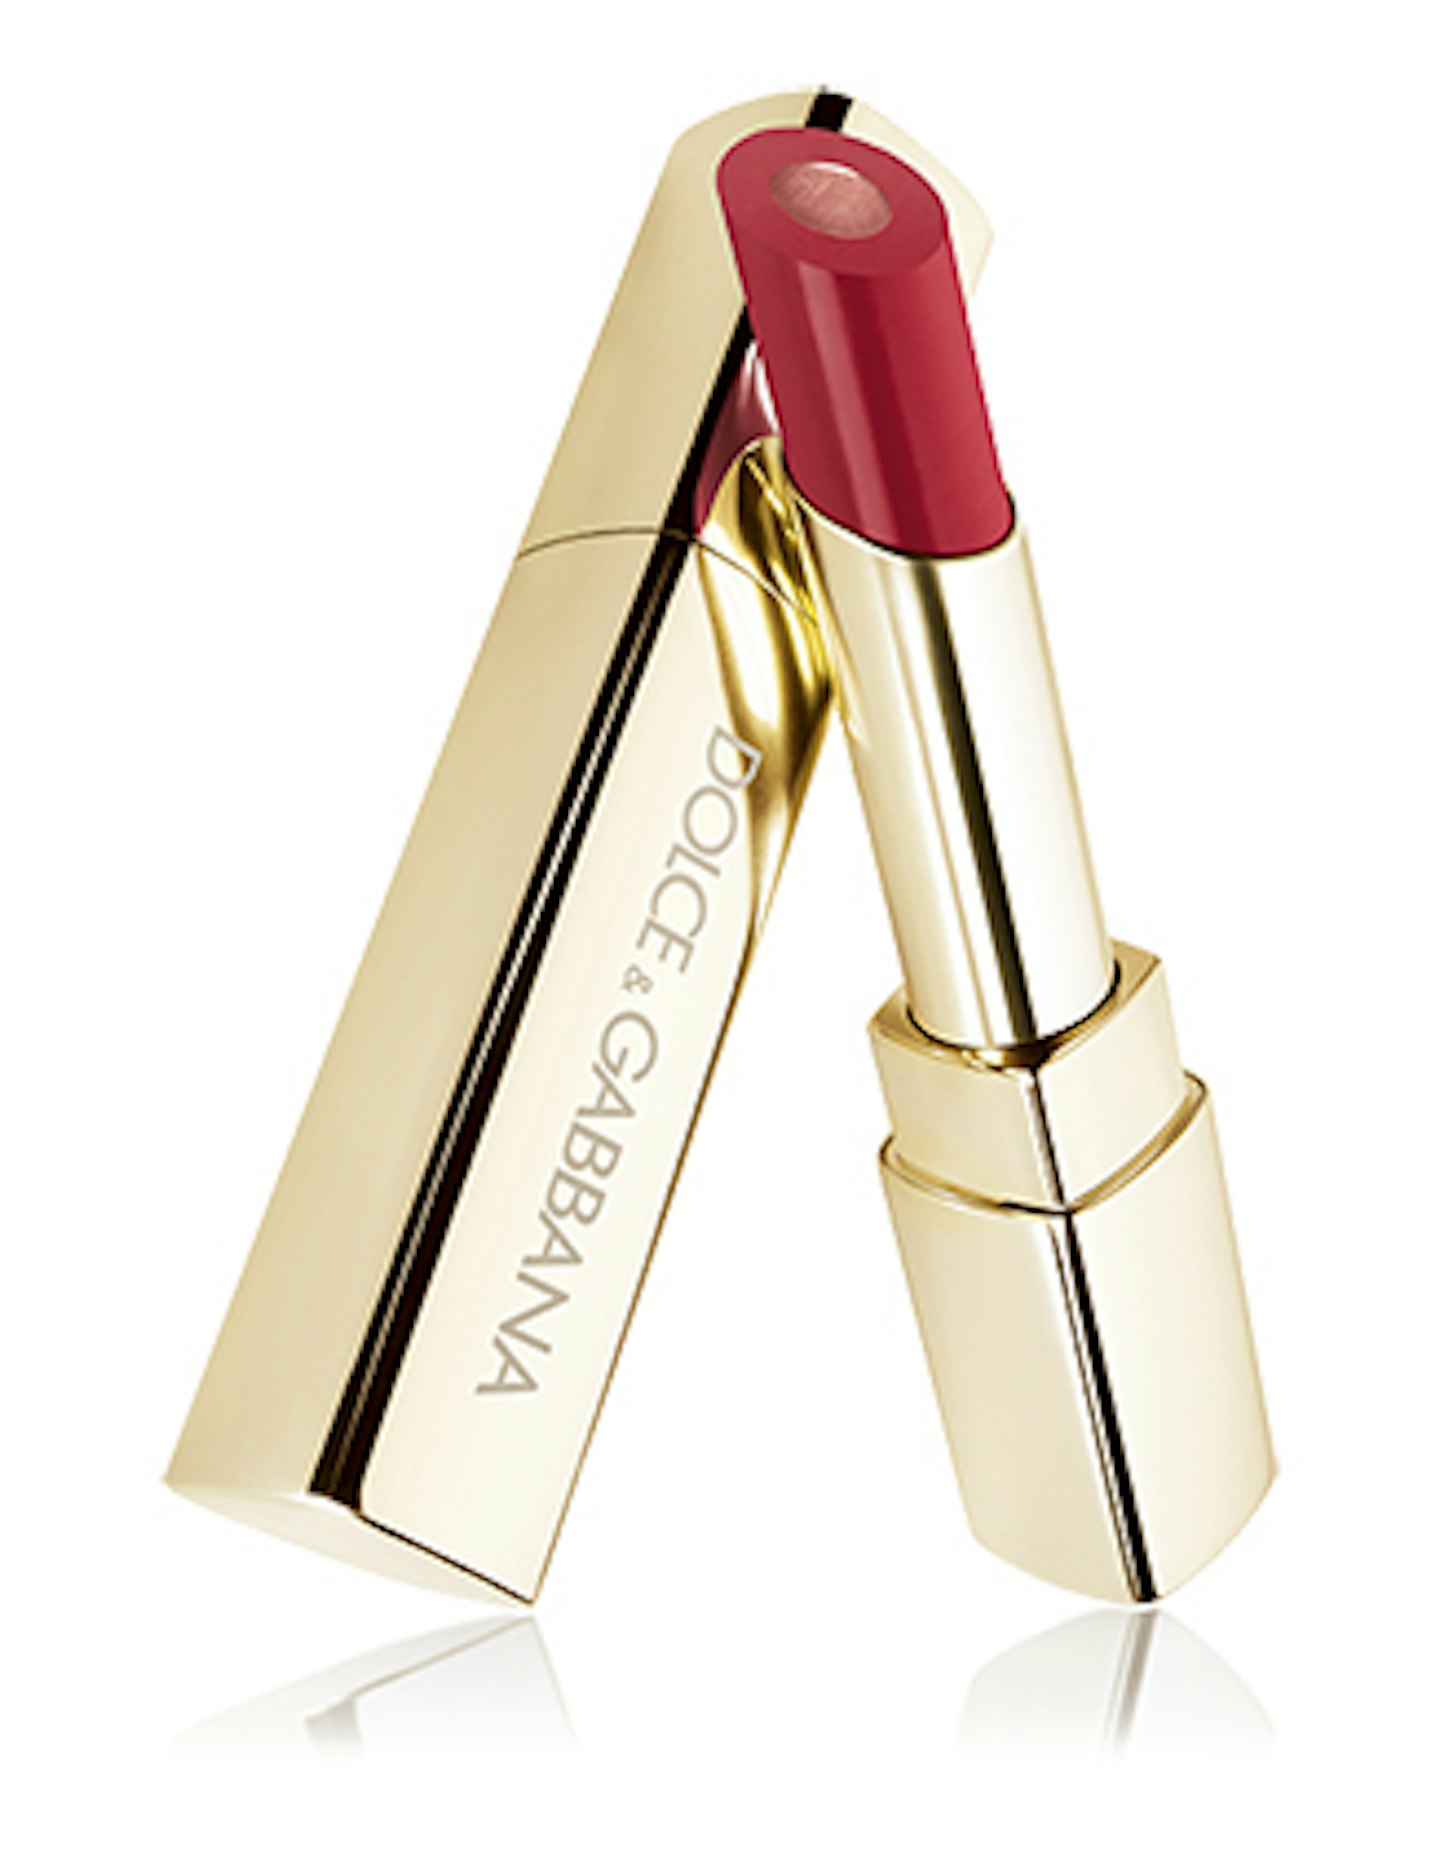 Dolce & Gabbana duo lipstick